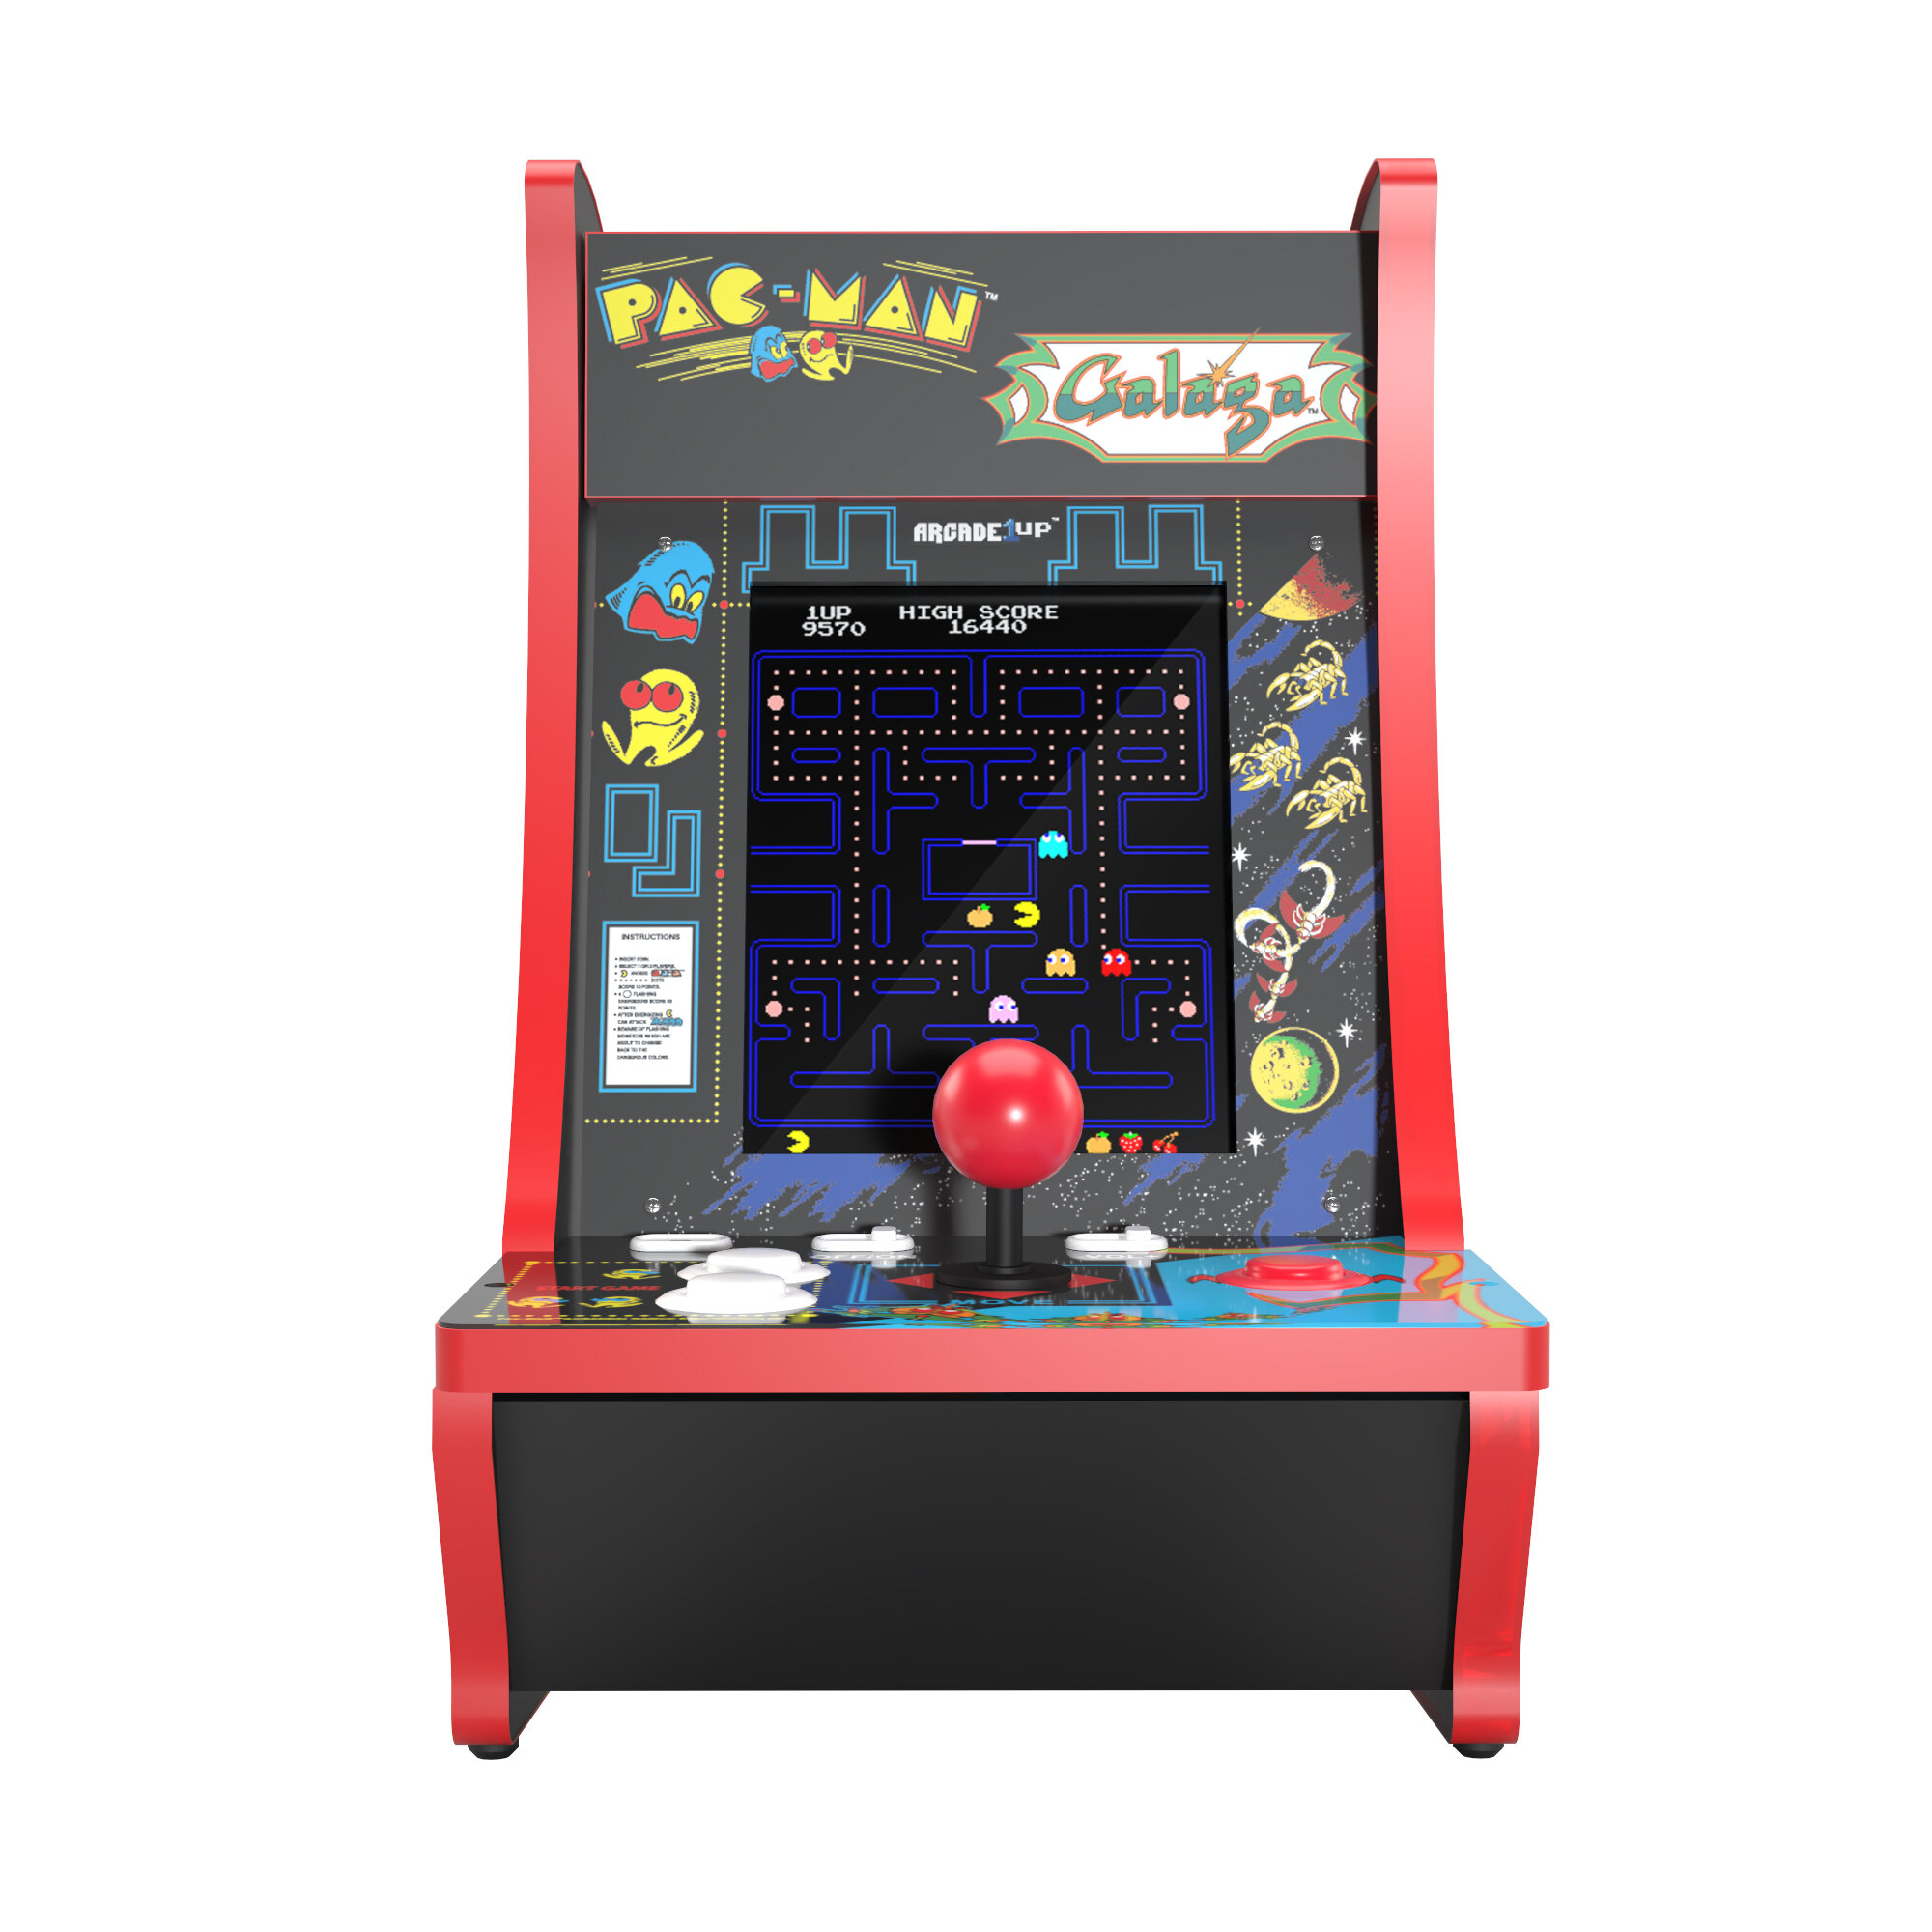 FIGHTCADE 2 - FULL SET 54GB: Multijogos Online completa com as ROMs #arcade  #multijogos #retrogames 